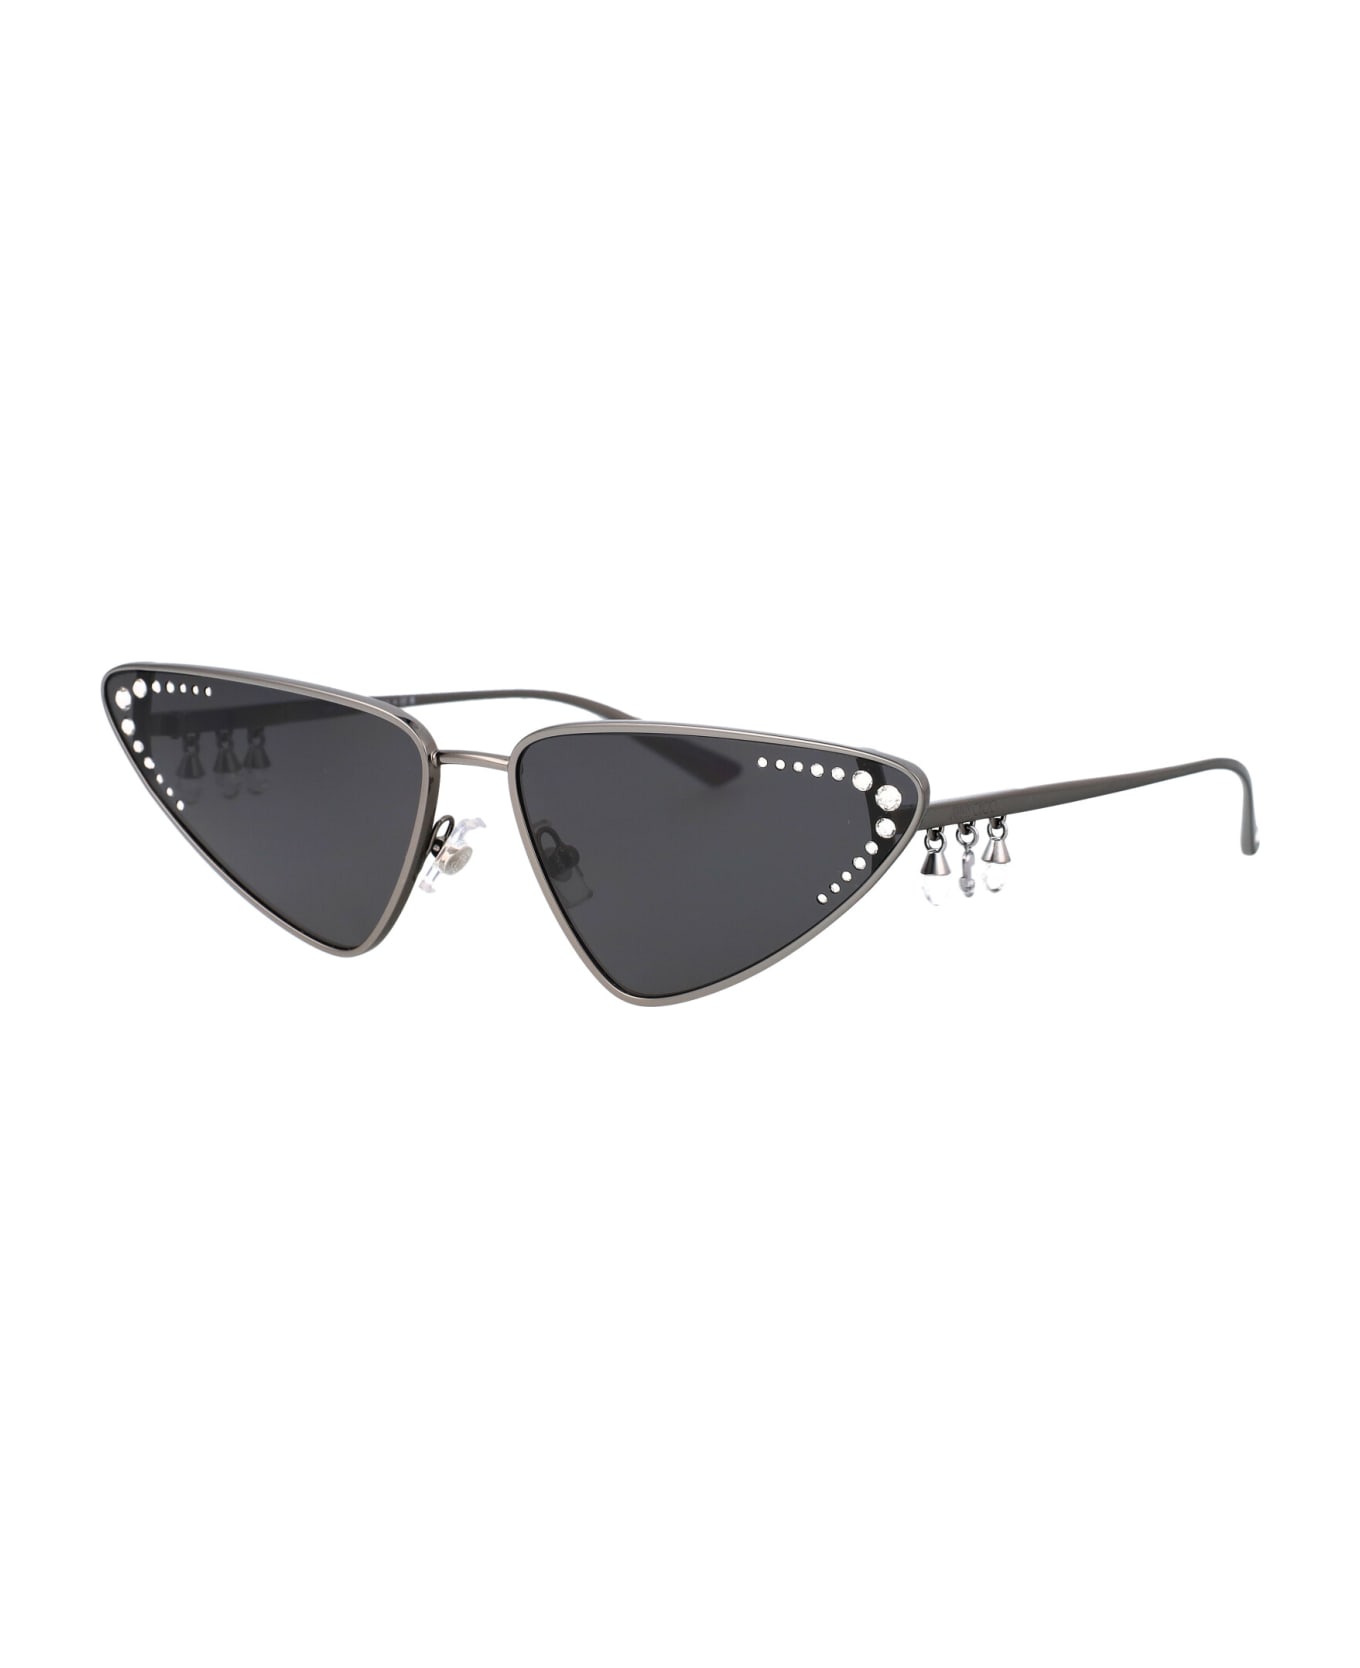 Jimmy Choo Eyewear 0jc4001b Sunglasses - 300487 Gunmetal